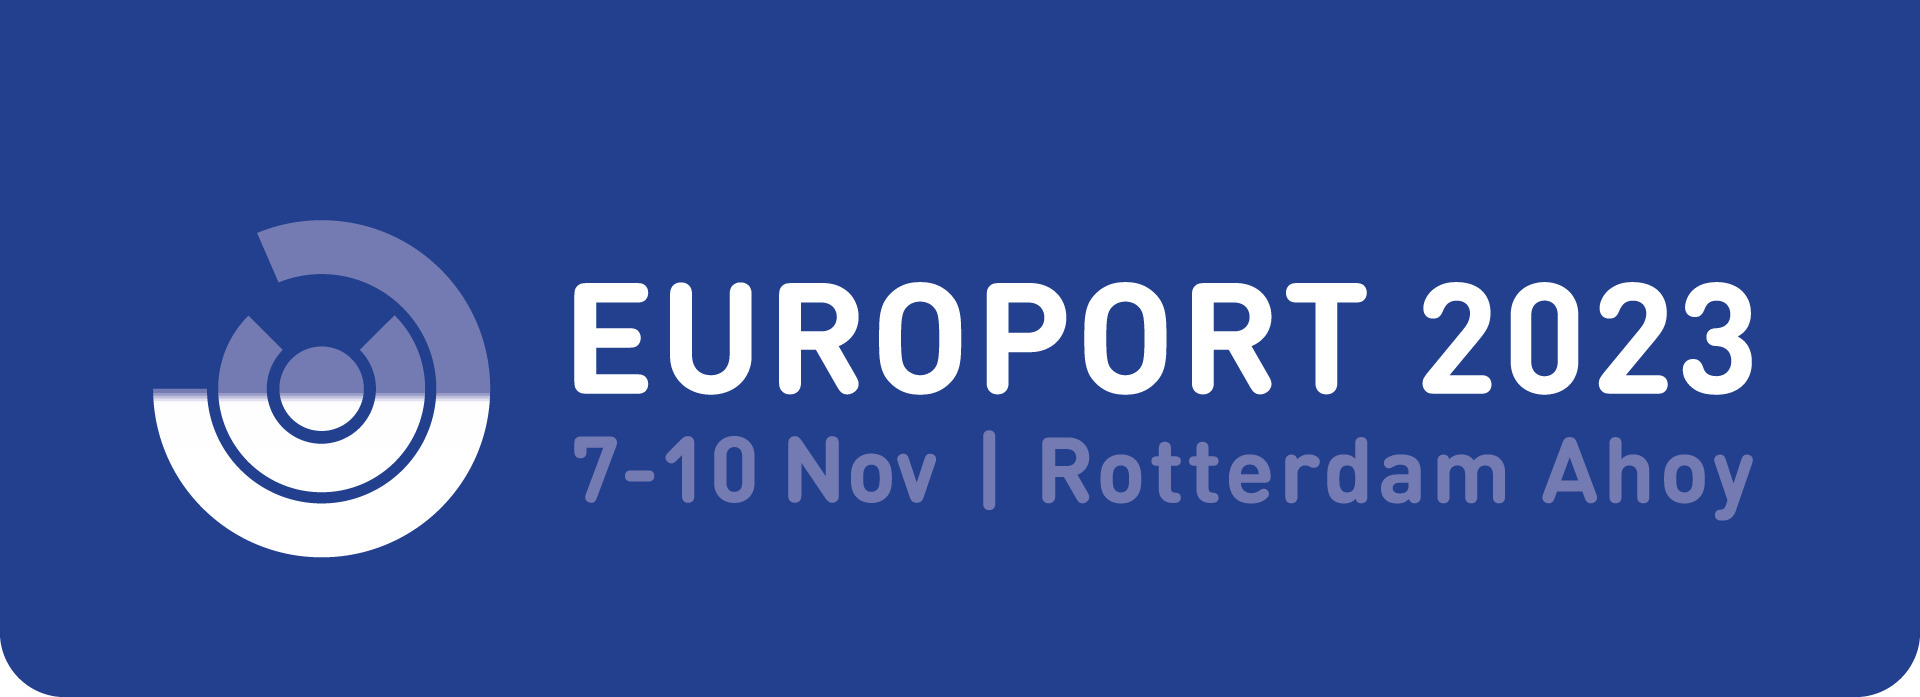 Europort 2023 - GospodarkaMorska.pl